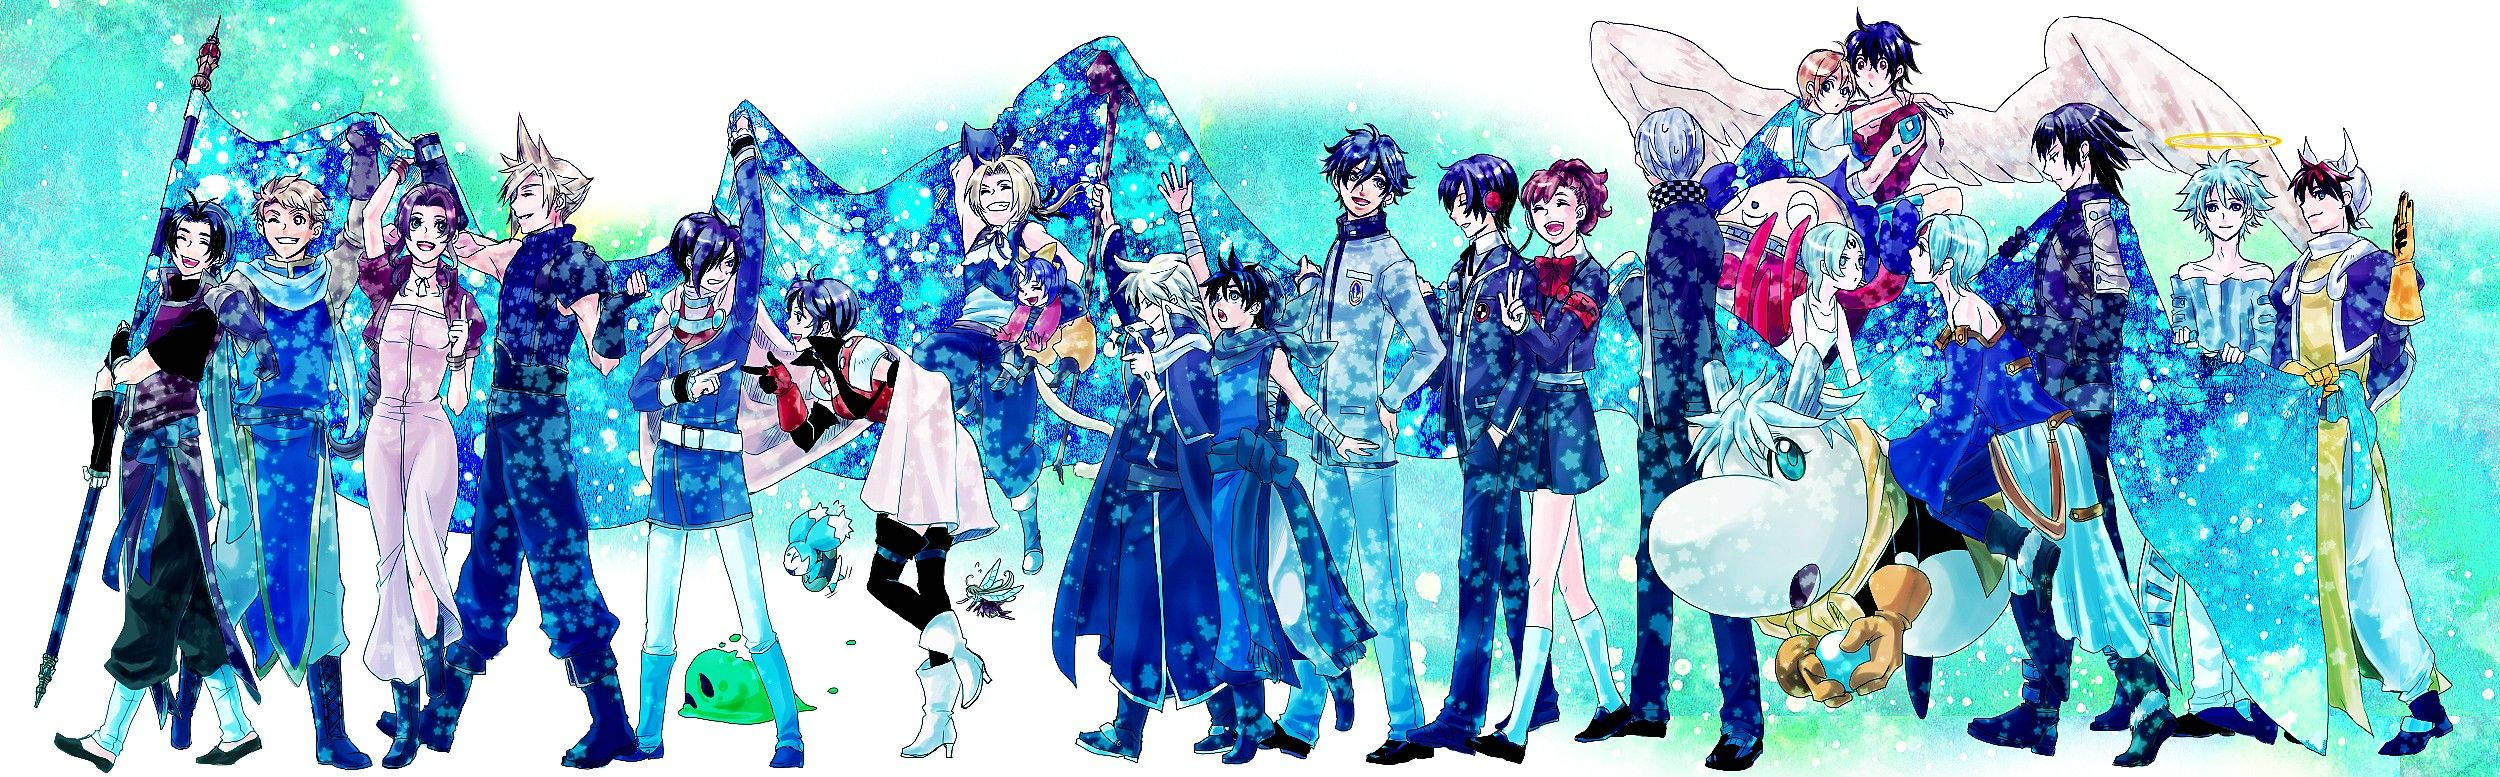 Persona Anime In Blue Wallpaper